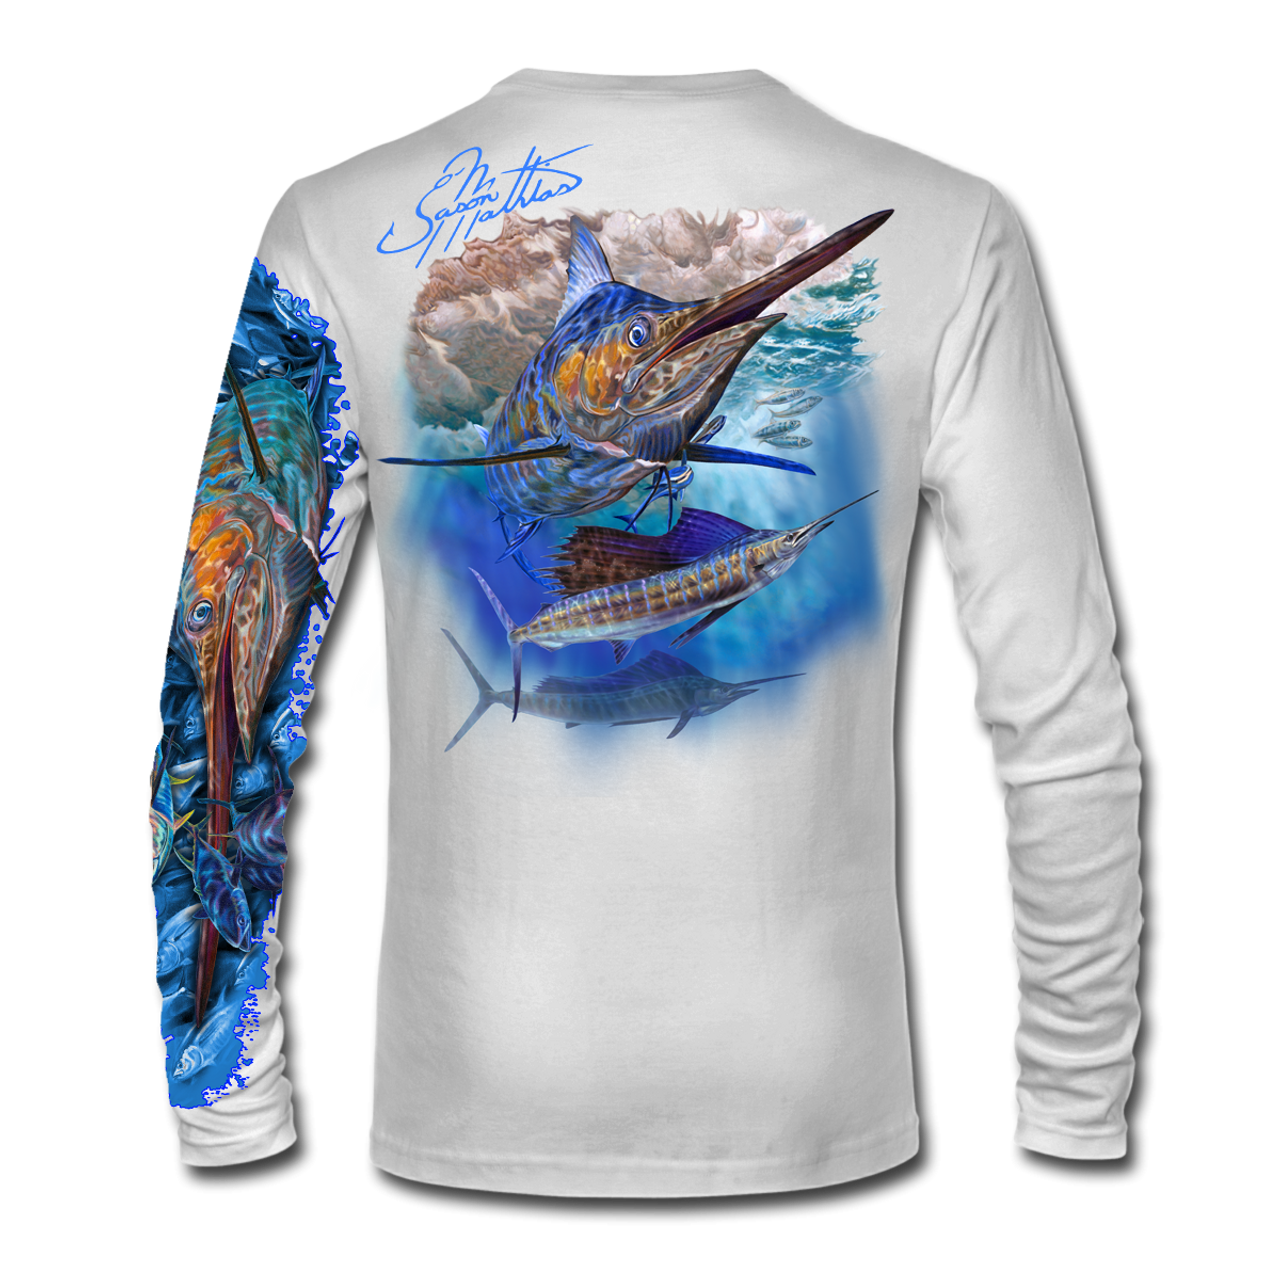 LS High Performance tee shirt (Marlin Sailfish)